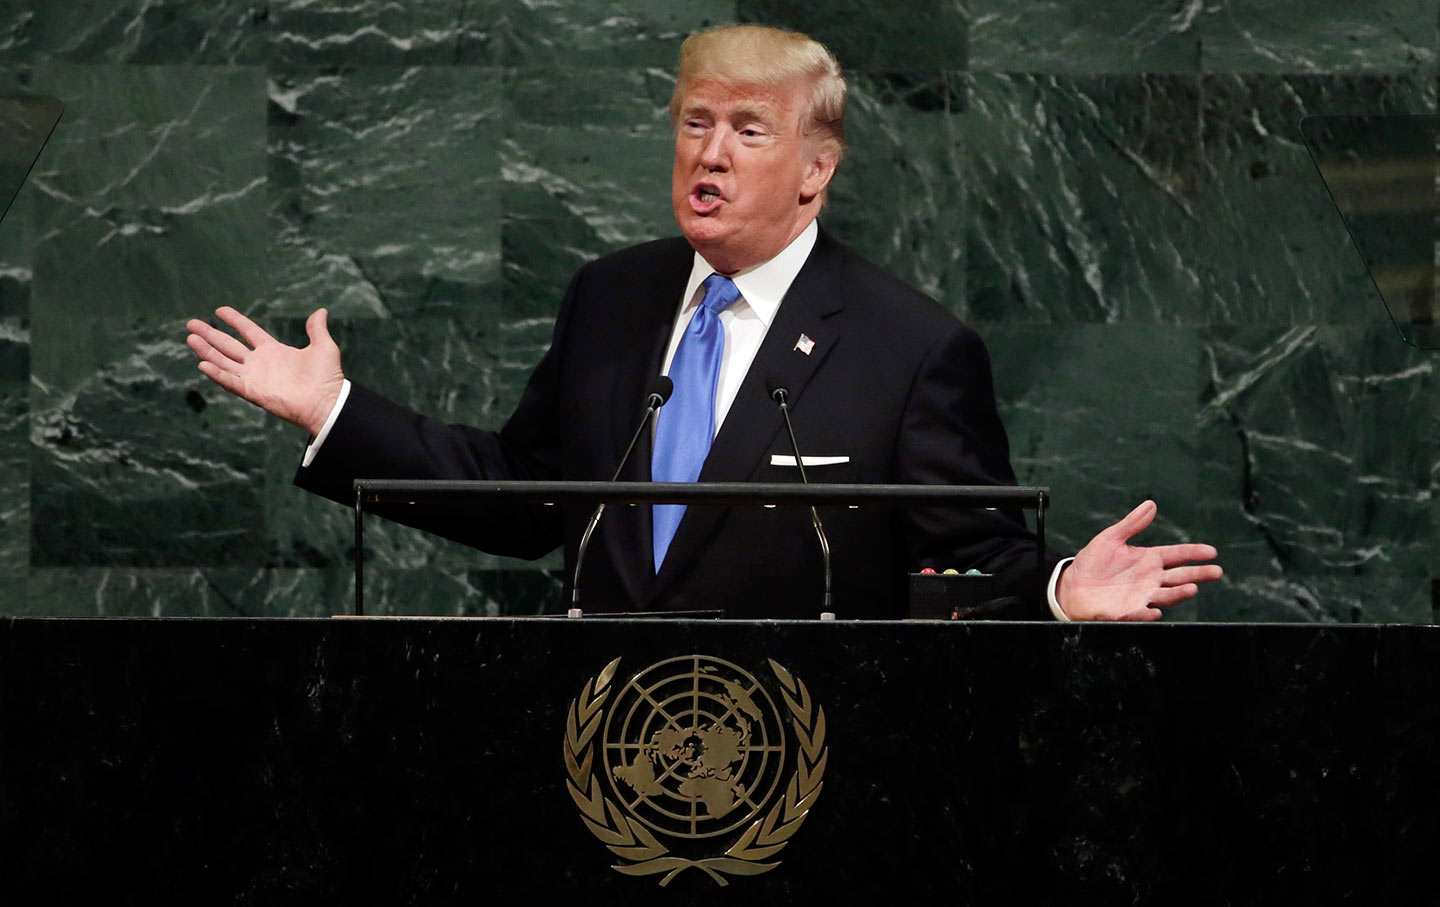 Trump addresses the UN